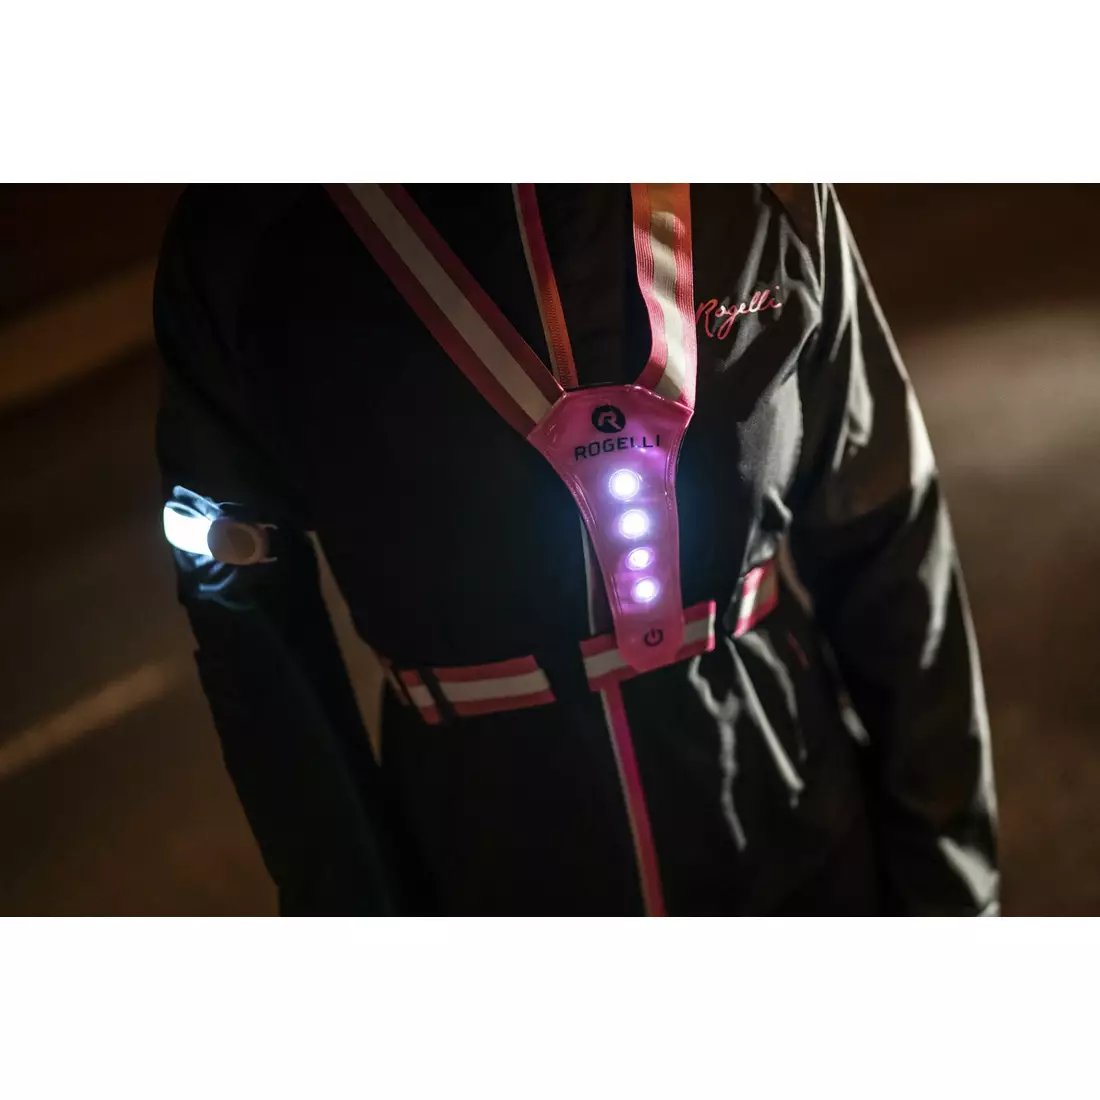 ROGELLI vesta reflectorizanta cu diode LED pink ROG351114